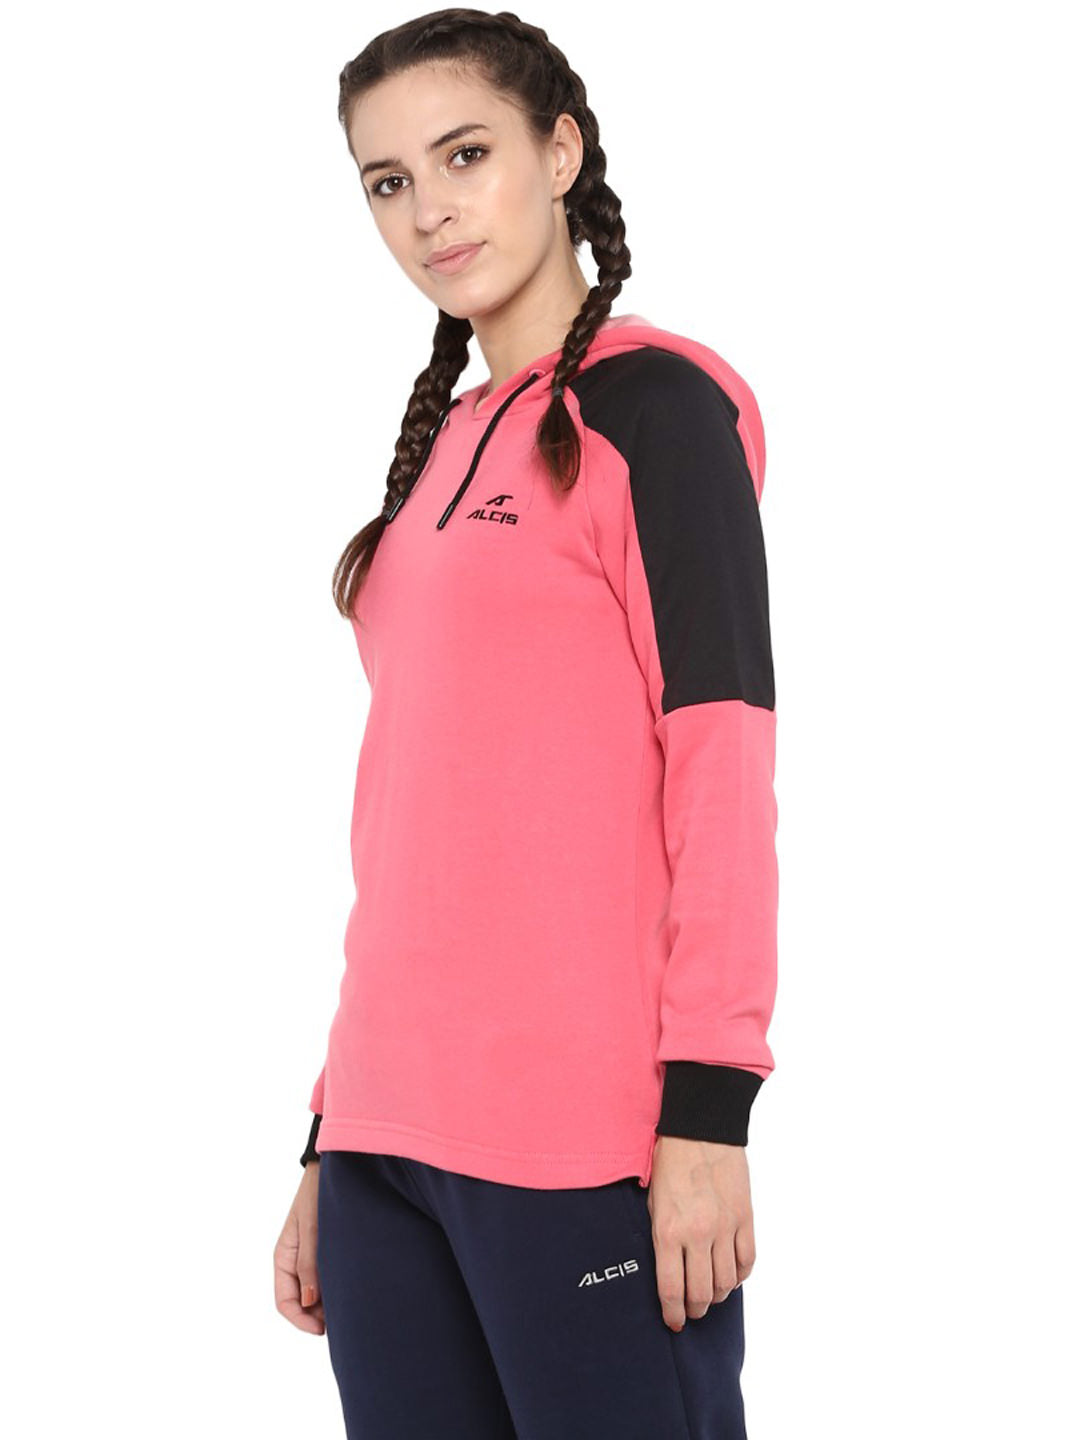 Alcis Women Pink  Black Colourblocked Hooded Sweatshirt